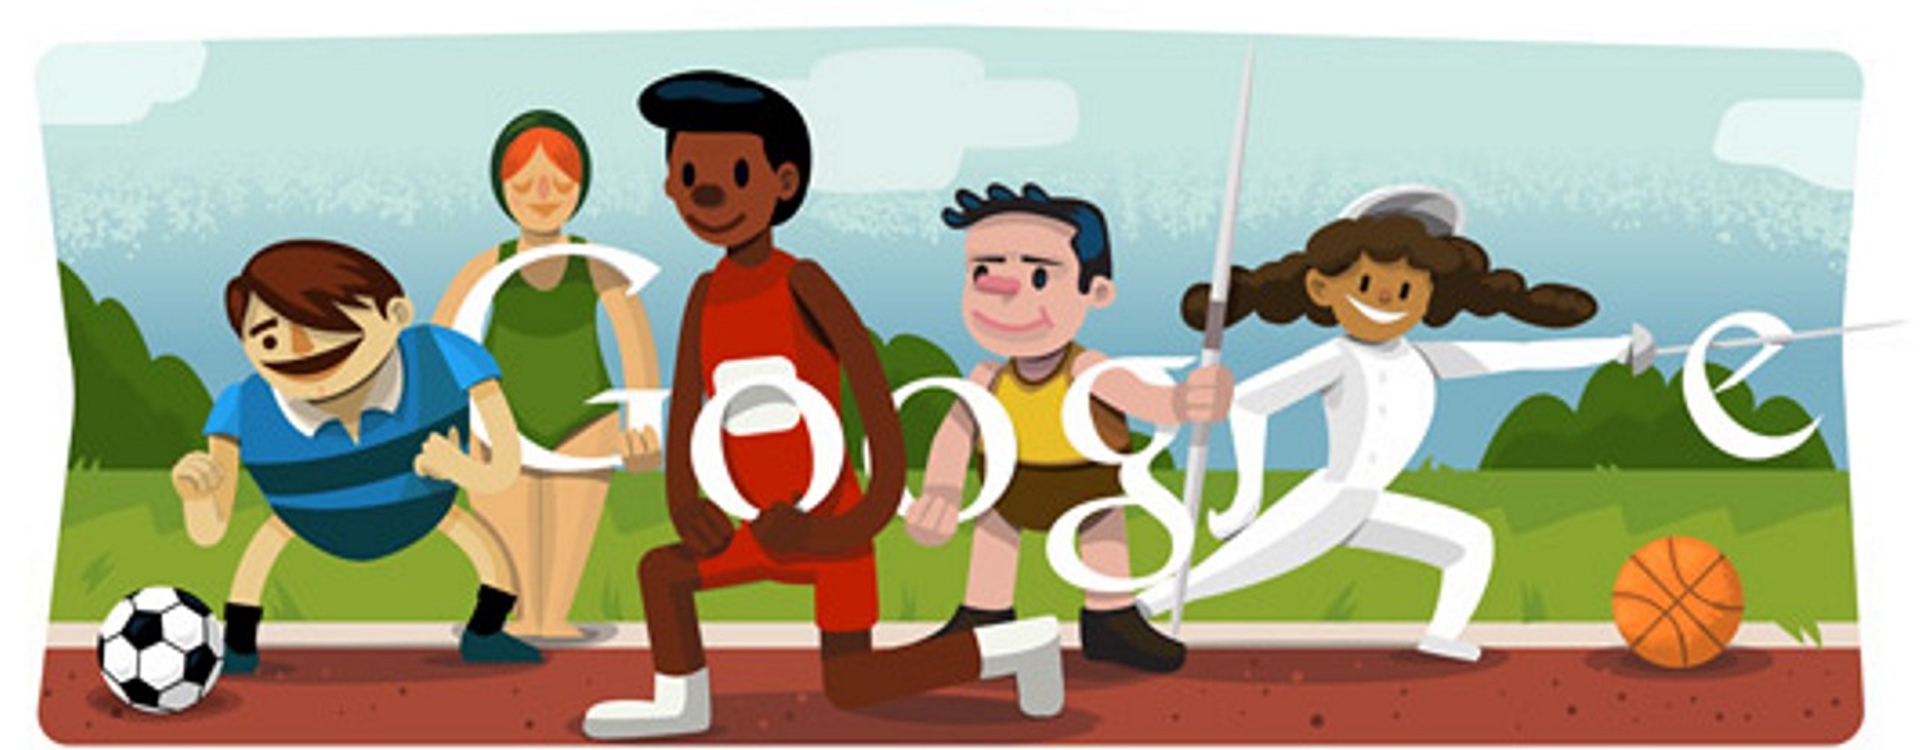 Olympics Opening Ceremony Google Doodle